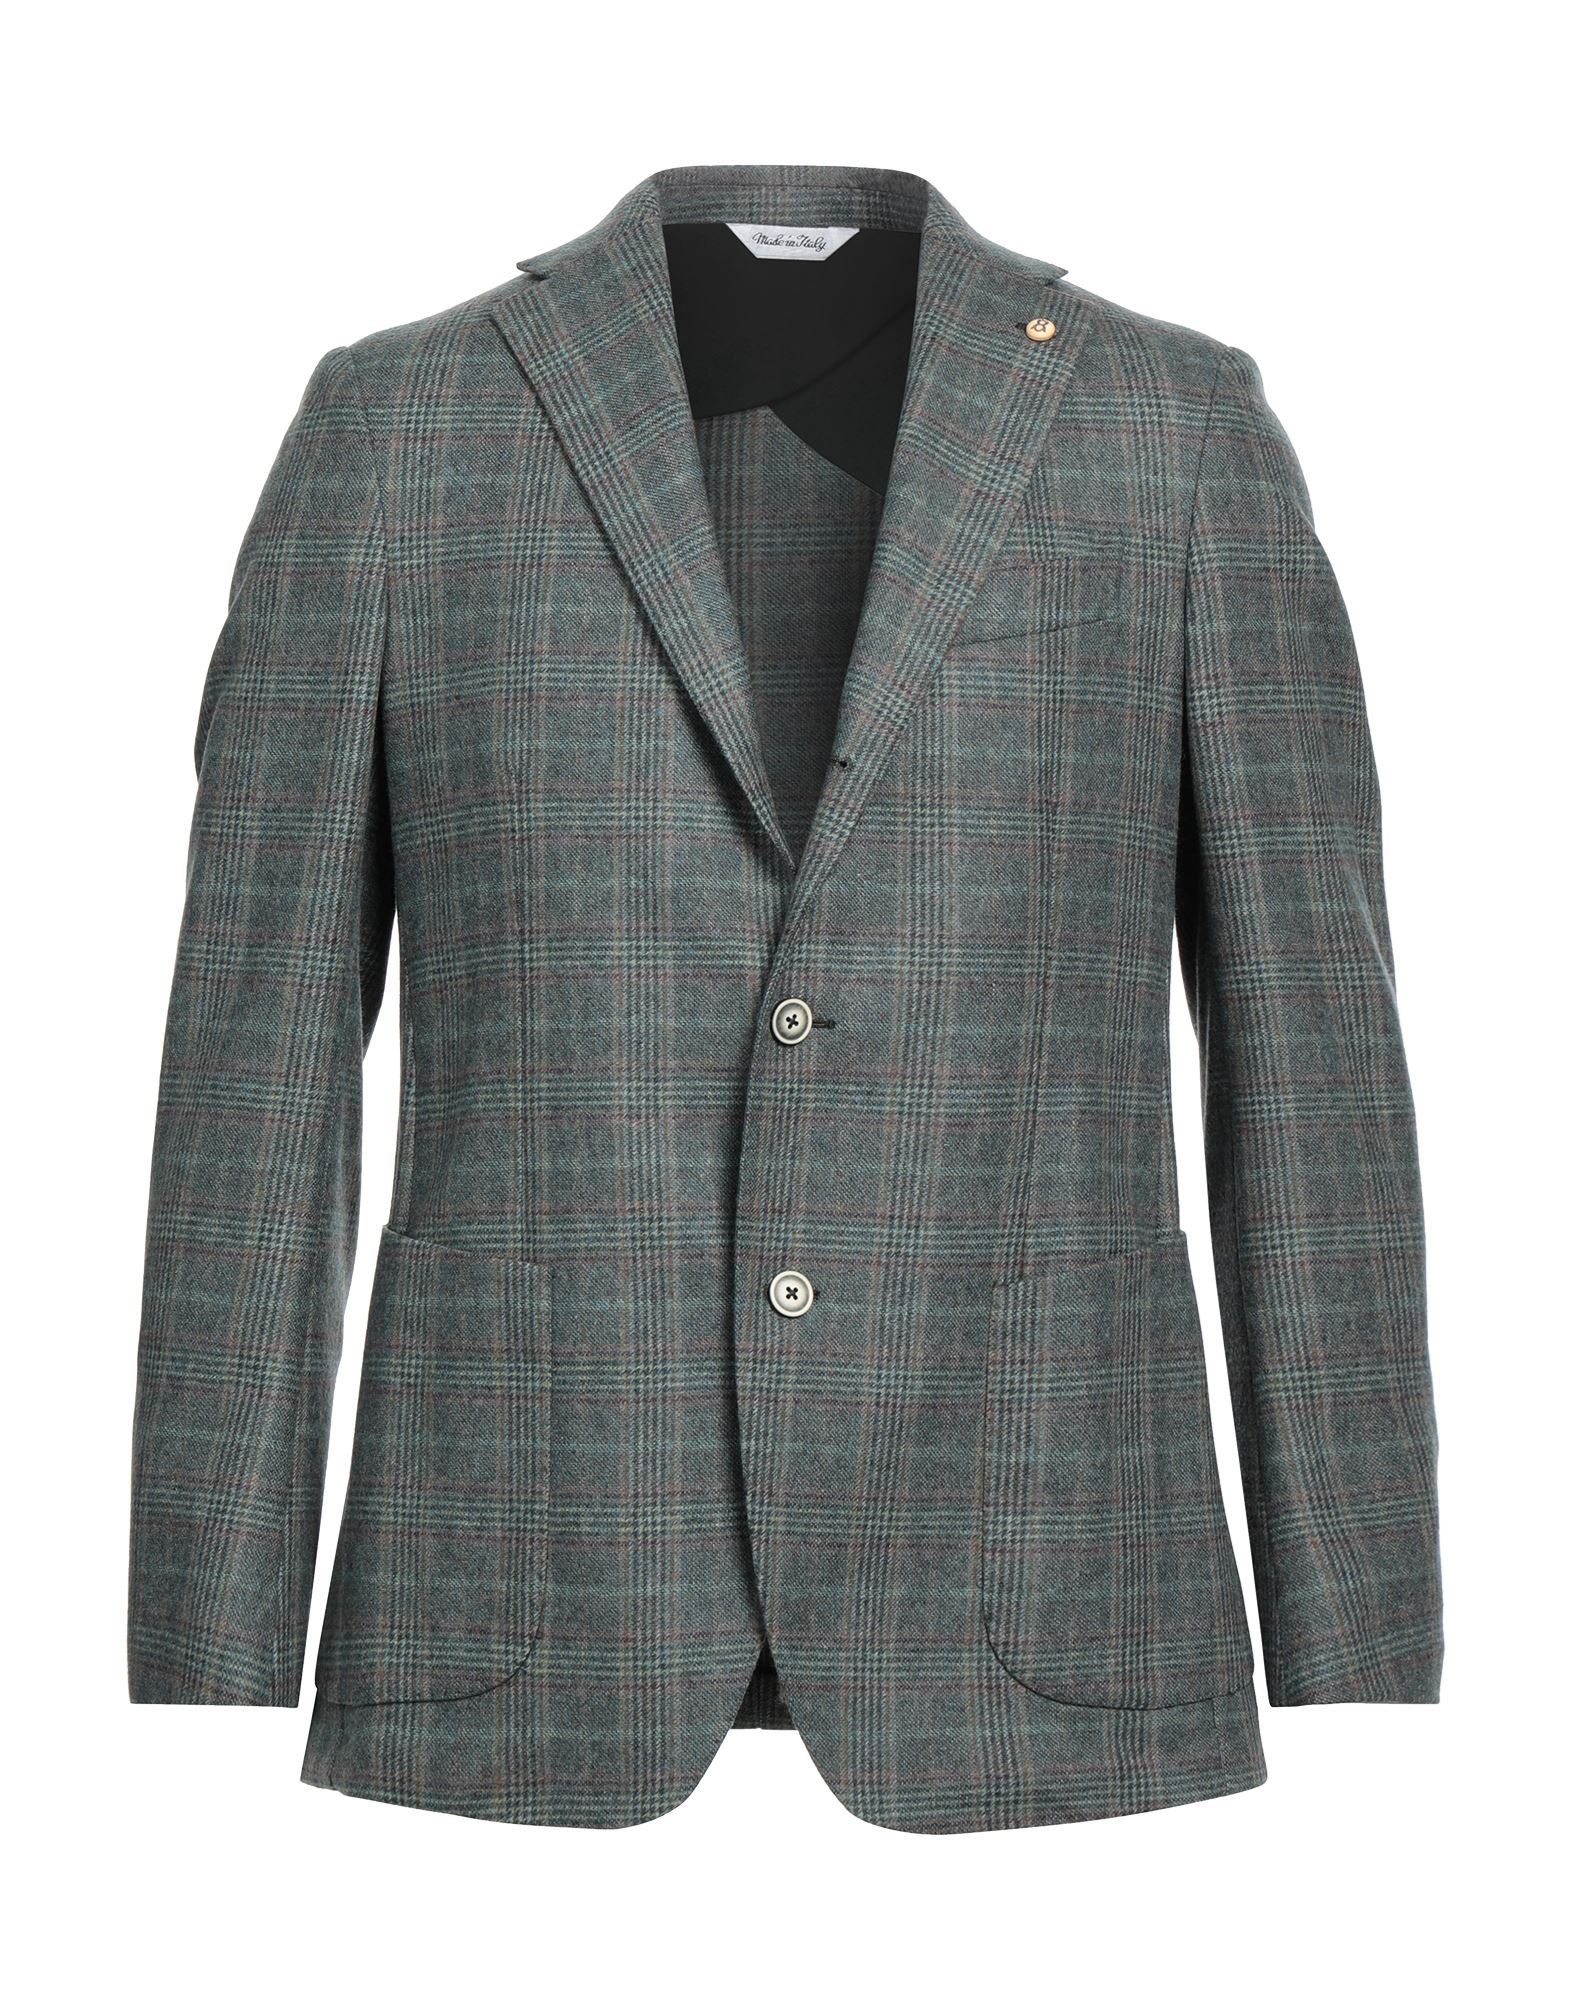 GI CAPRI Suit jackets